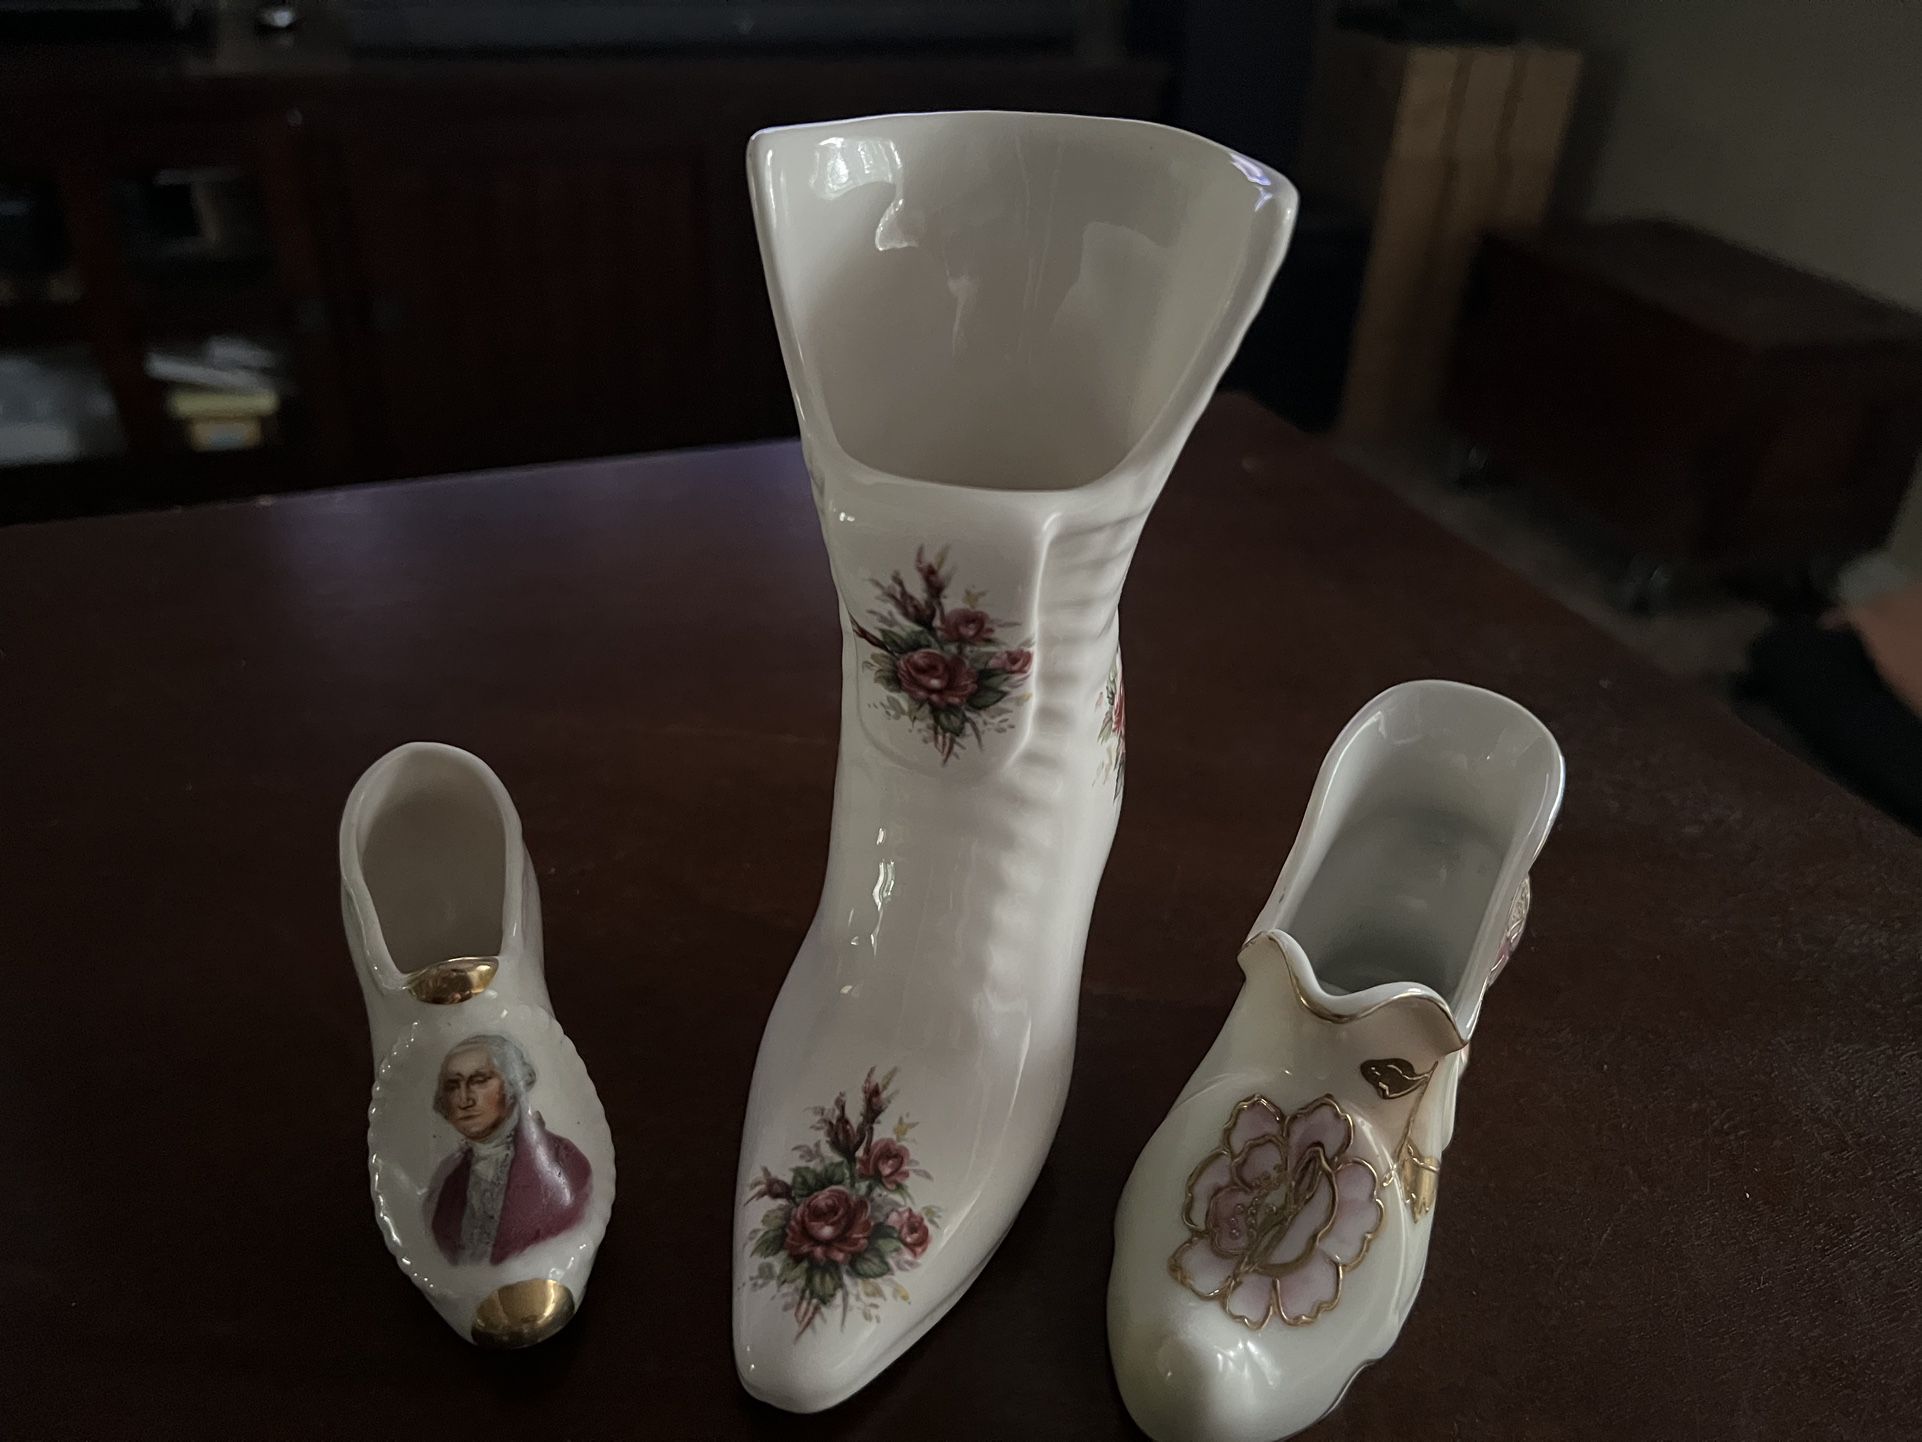 3 Piece Vintage Boot/Shoe Planters Or Vases EUC OBO